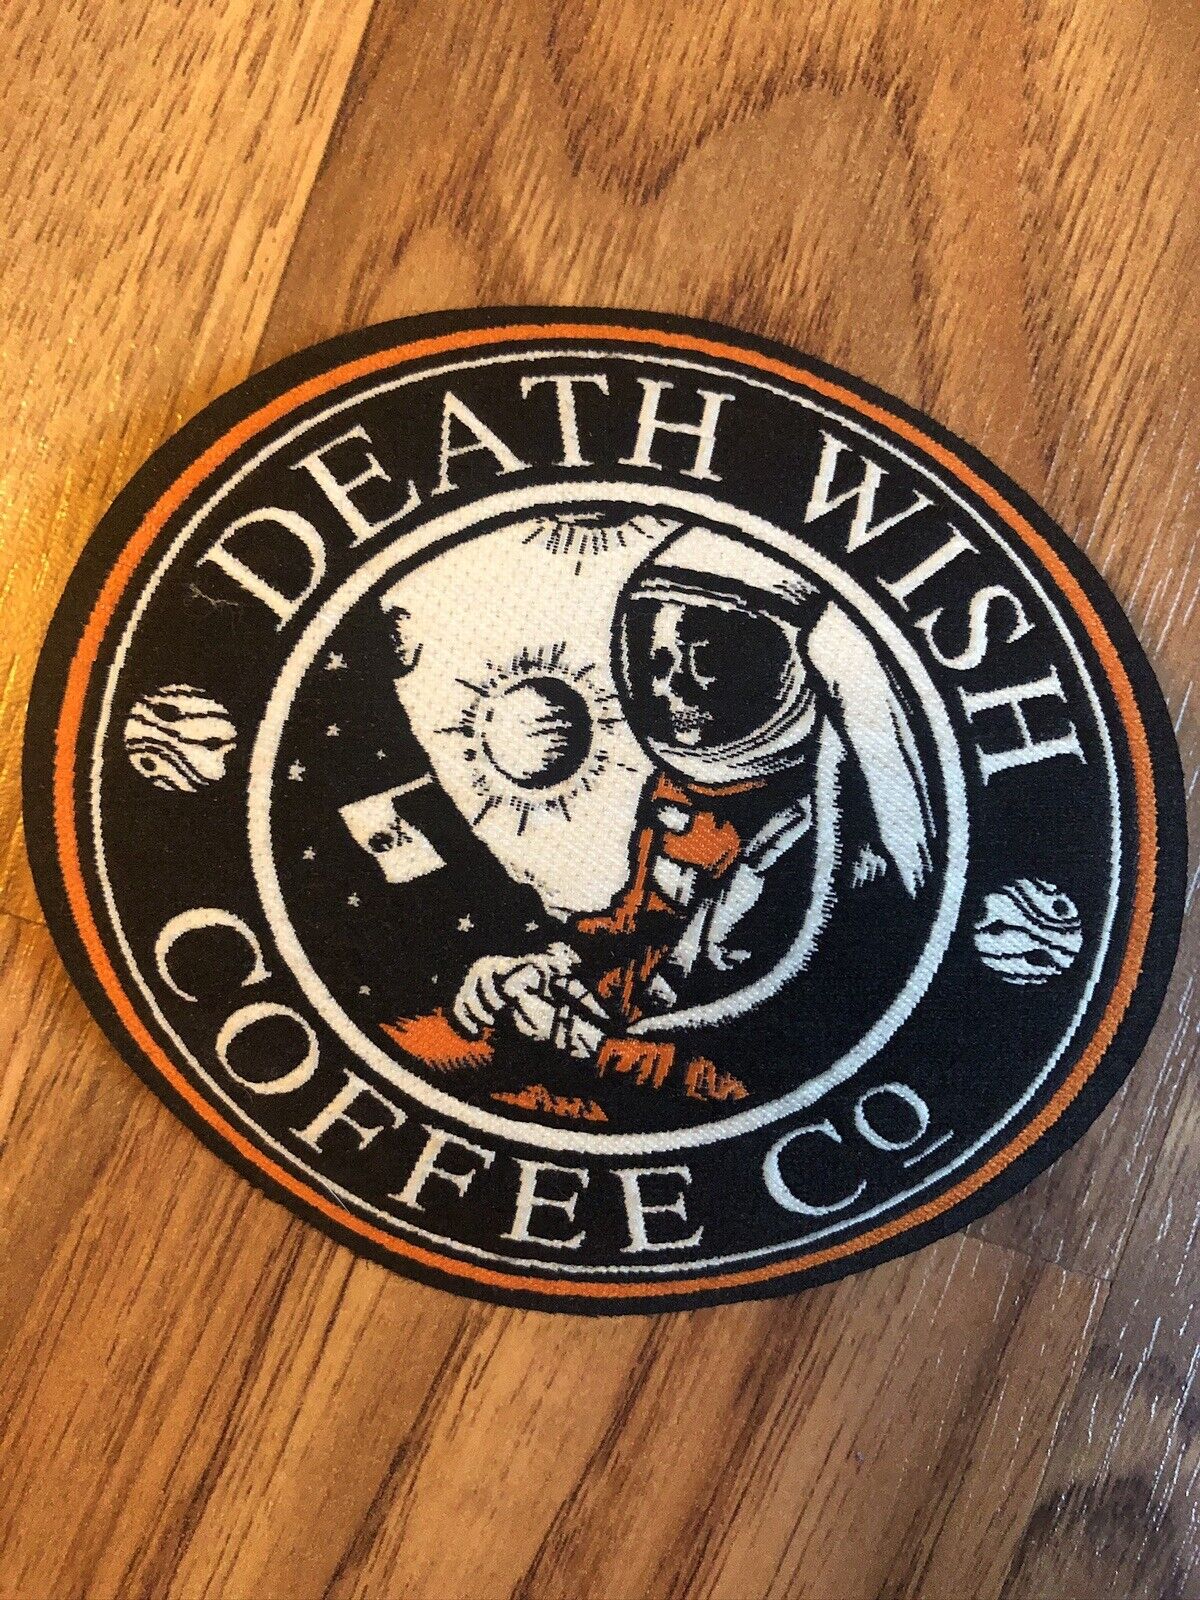 Death Wish Coffee Company Space Oddity Odyssey Space X 3.5” Patch